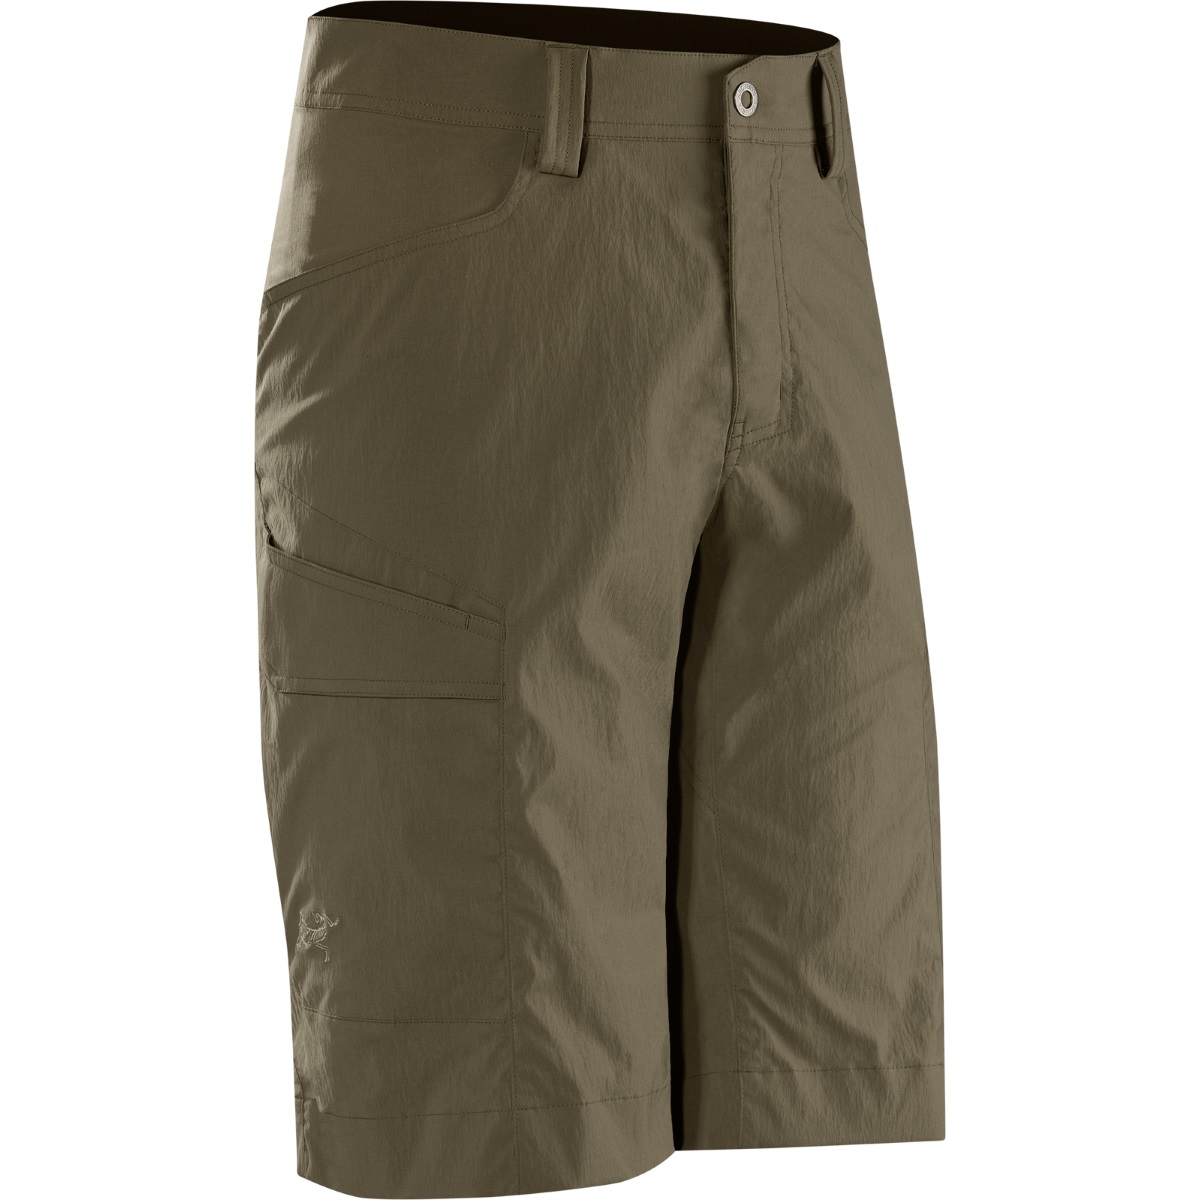 Arc'teryx Rampart Long, men's, discontinued colors :: Pants, Trail ...